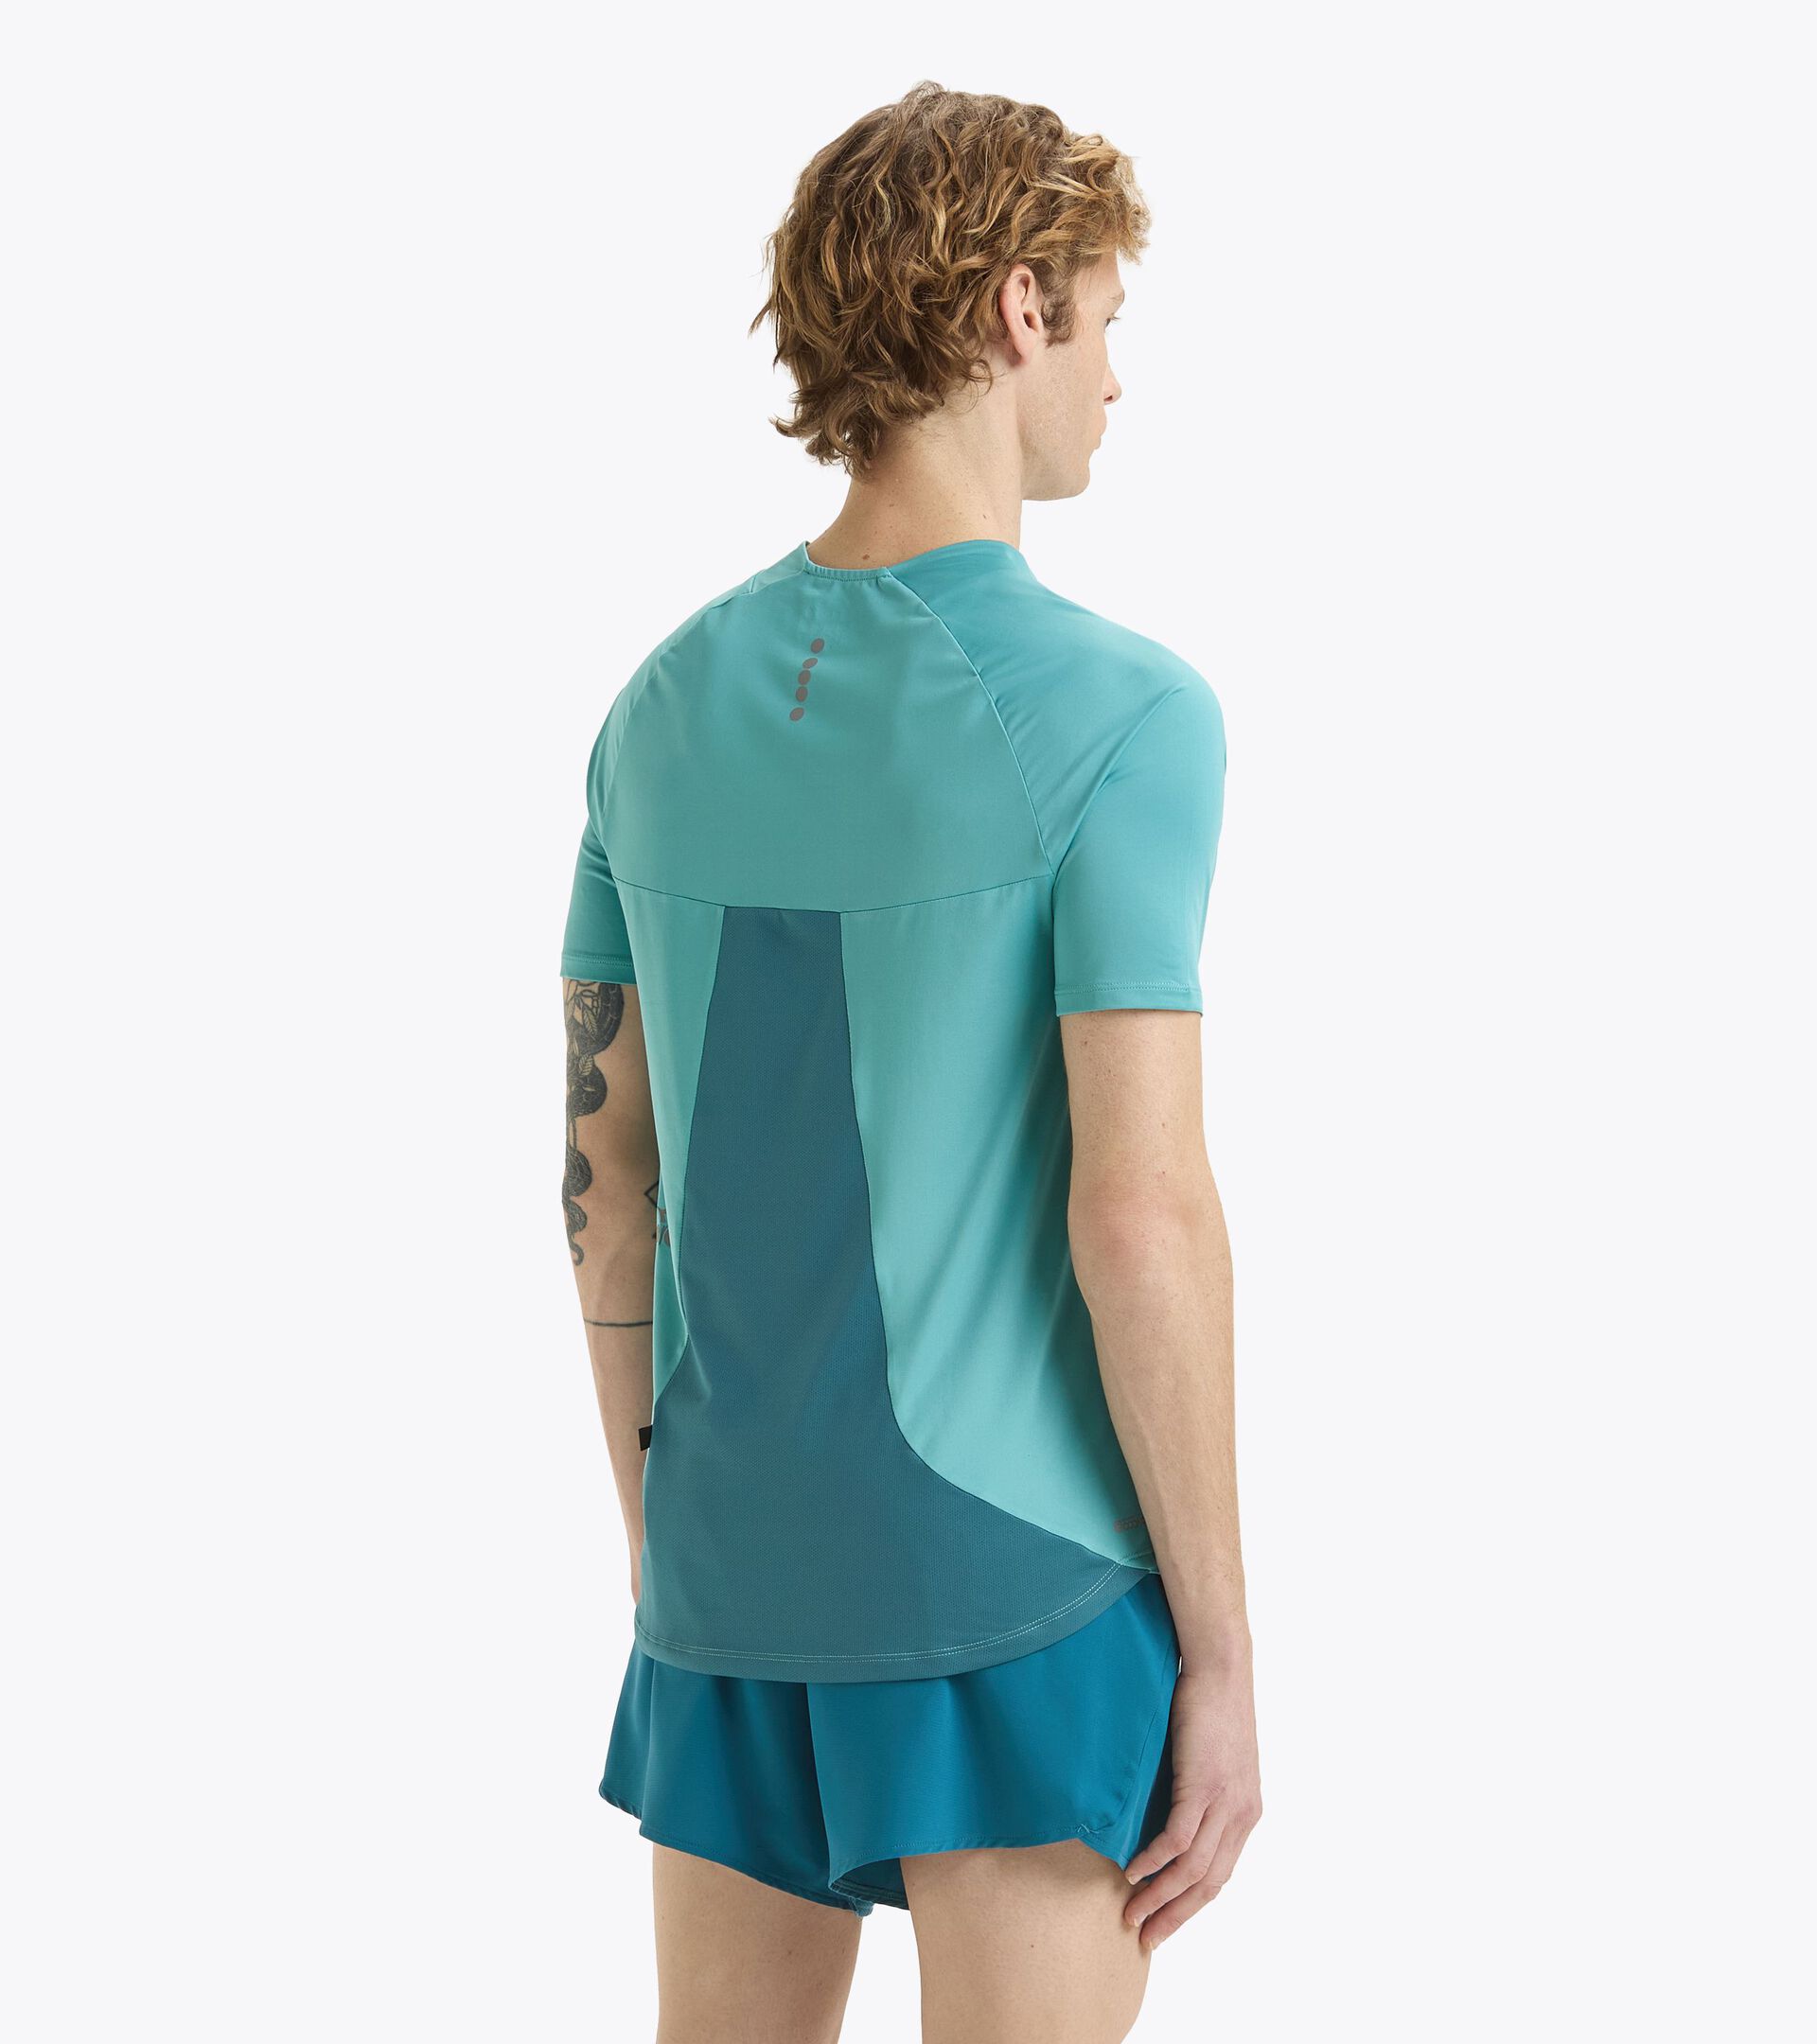 Camiseta de running - Tejido ligero - Hombre
 SUPER LIGHT SS T-SHIRT DUSTY TURQUOISE - Diadora